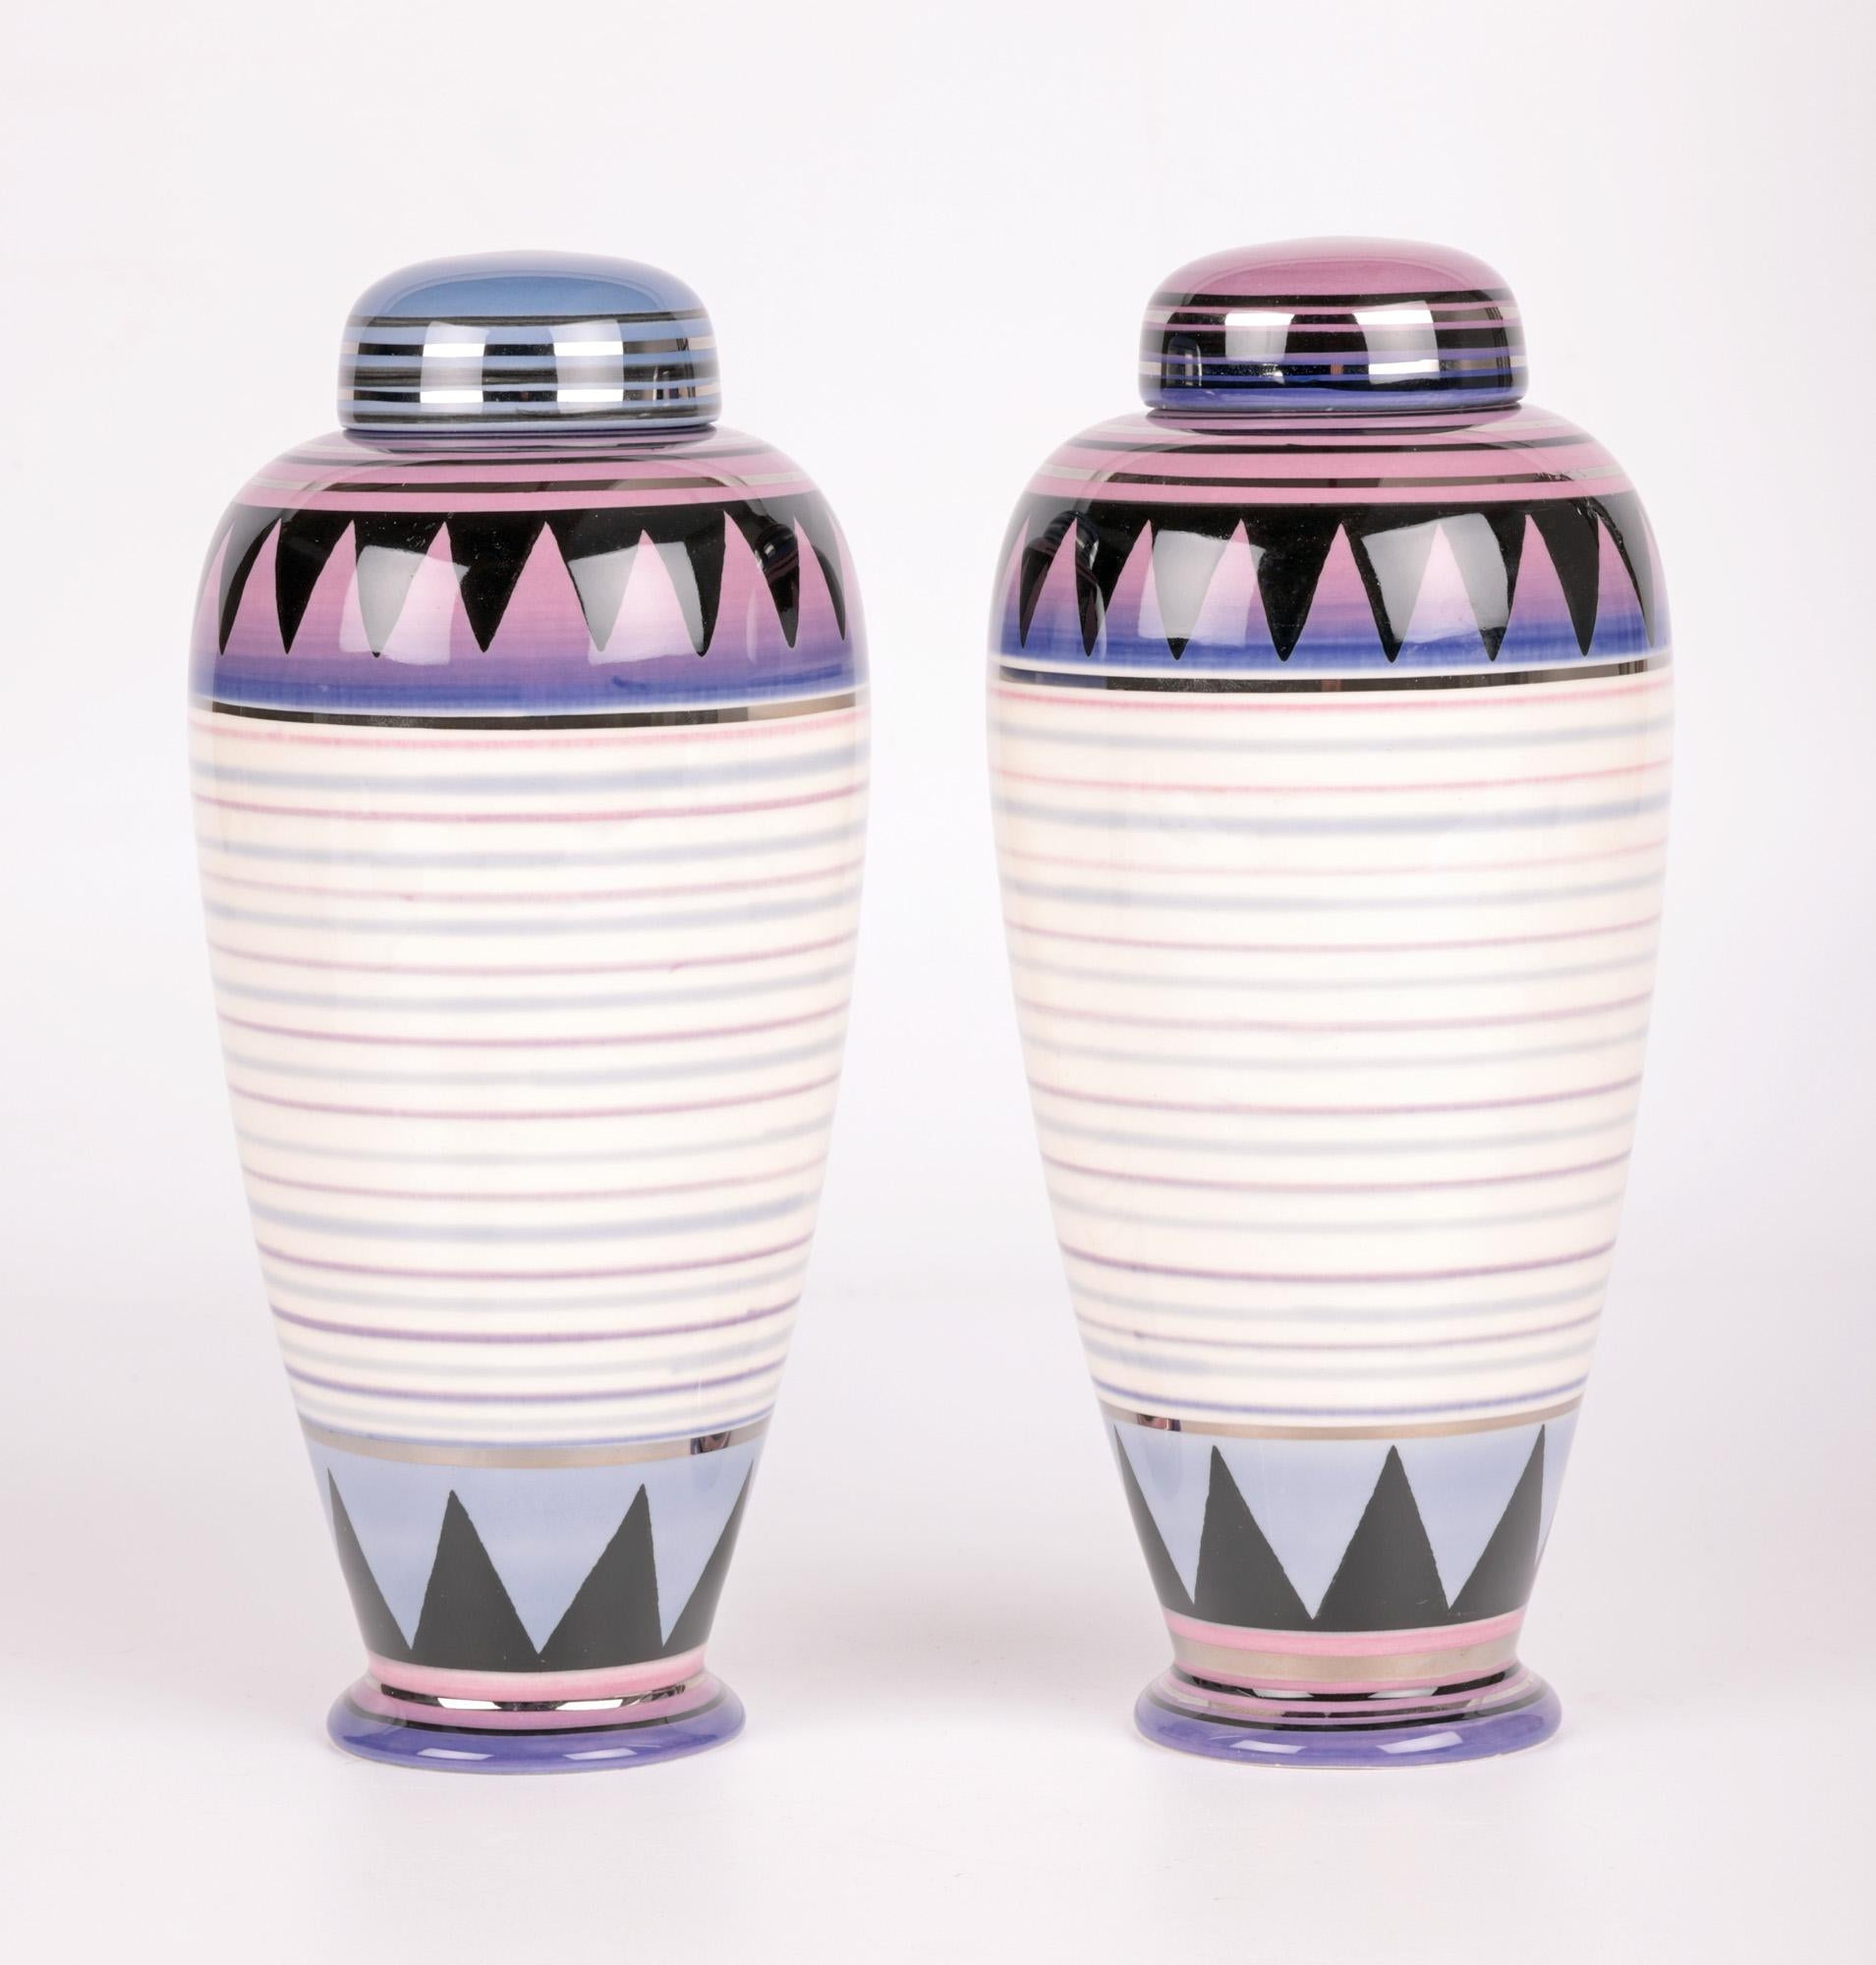 Moorland Pottery Paar keramische Vasen mit Deckeln   im Angebot 2